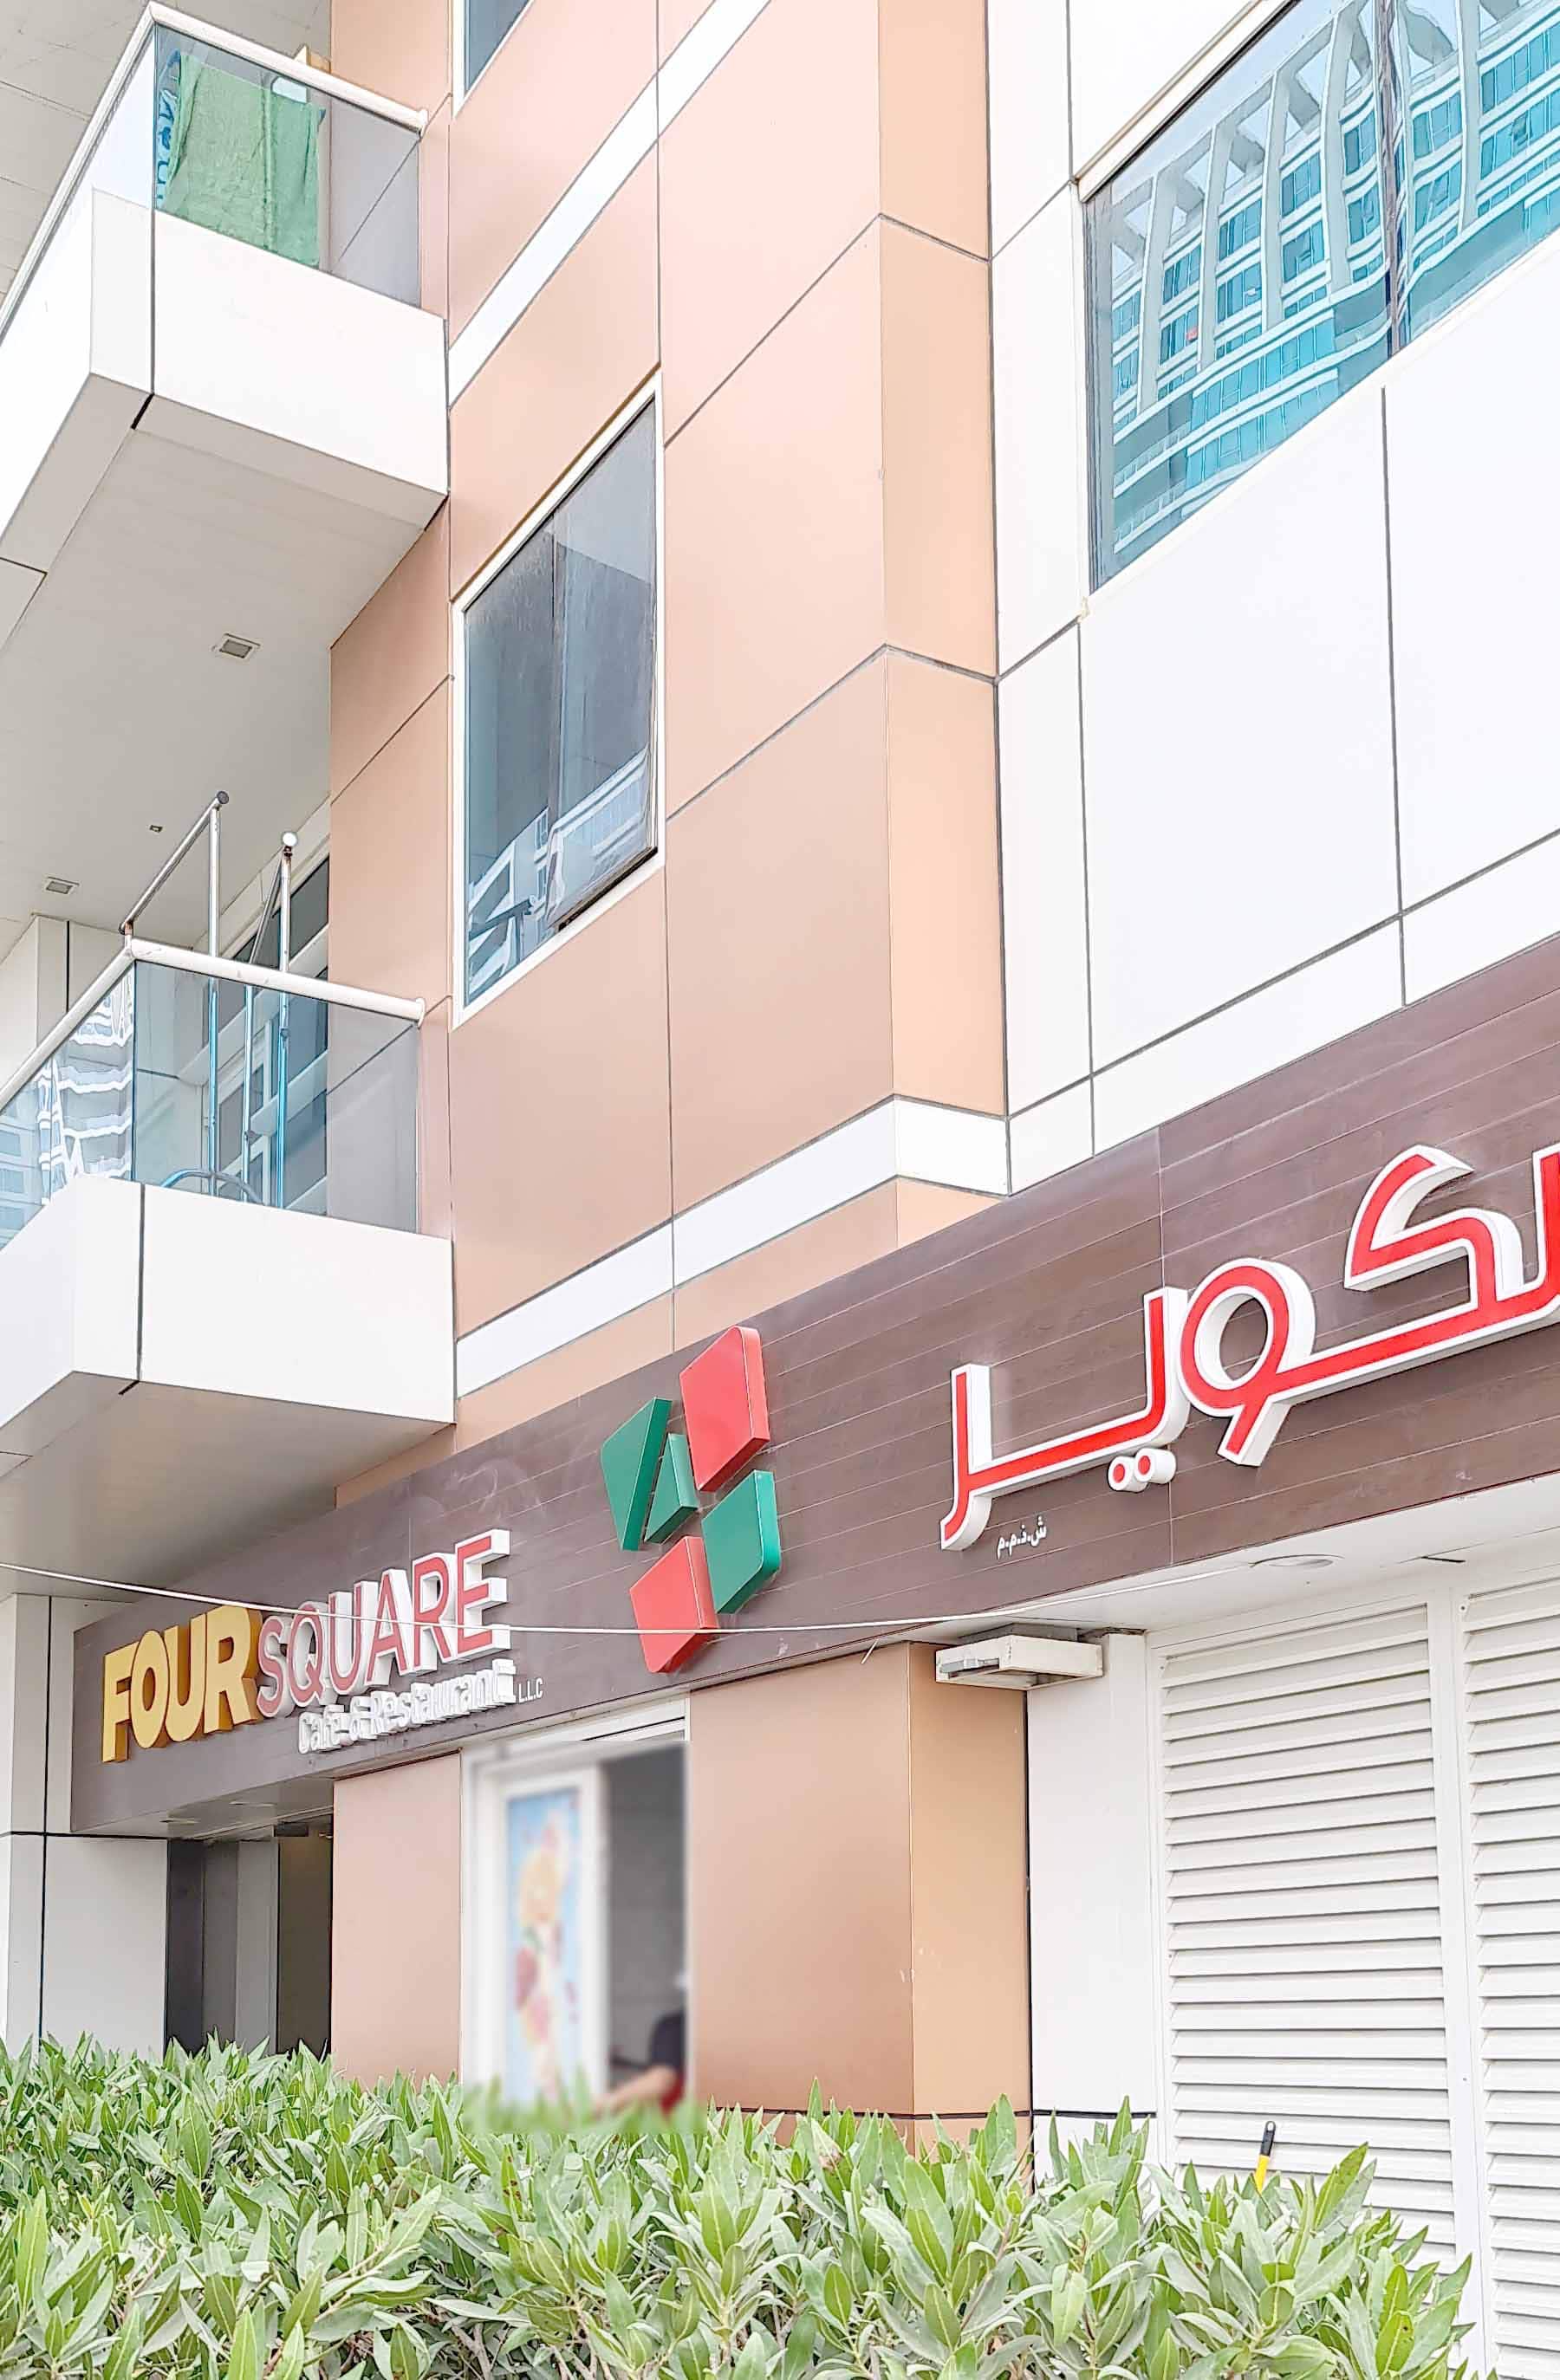 Four Square Cafe & Restaurant(Restaurants & Bars) in Dubailand  Residences/Skycourts (Wadi Al Safa 5), Dubai - HiDubai